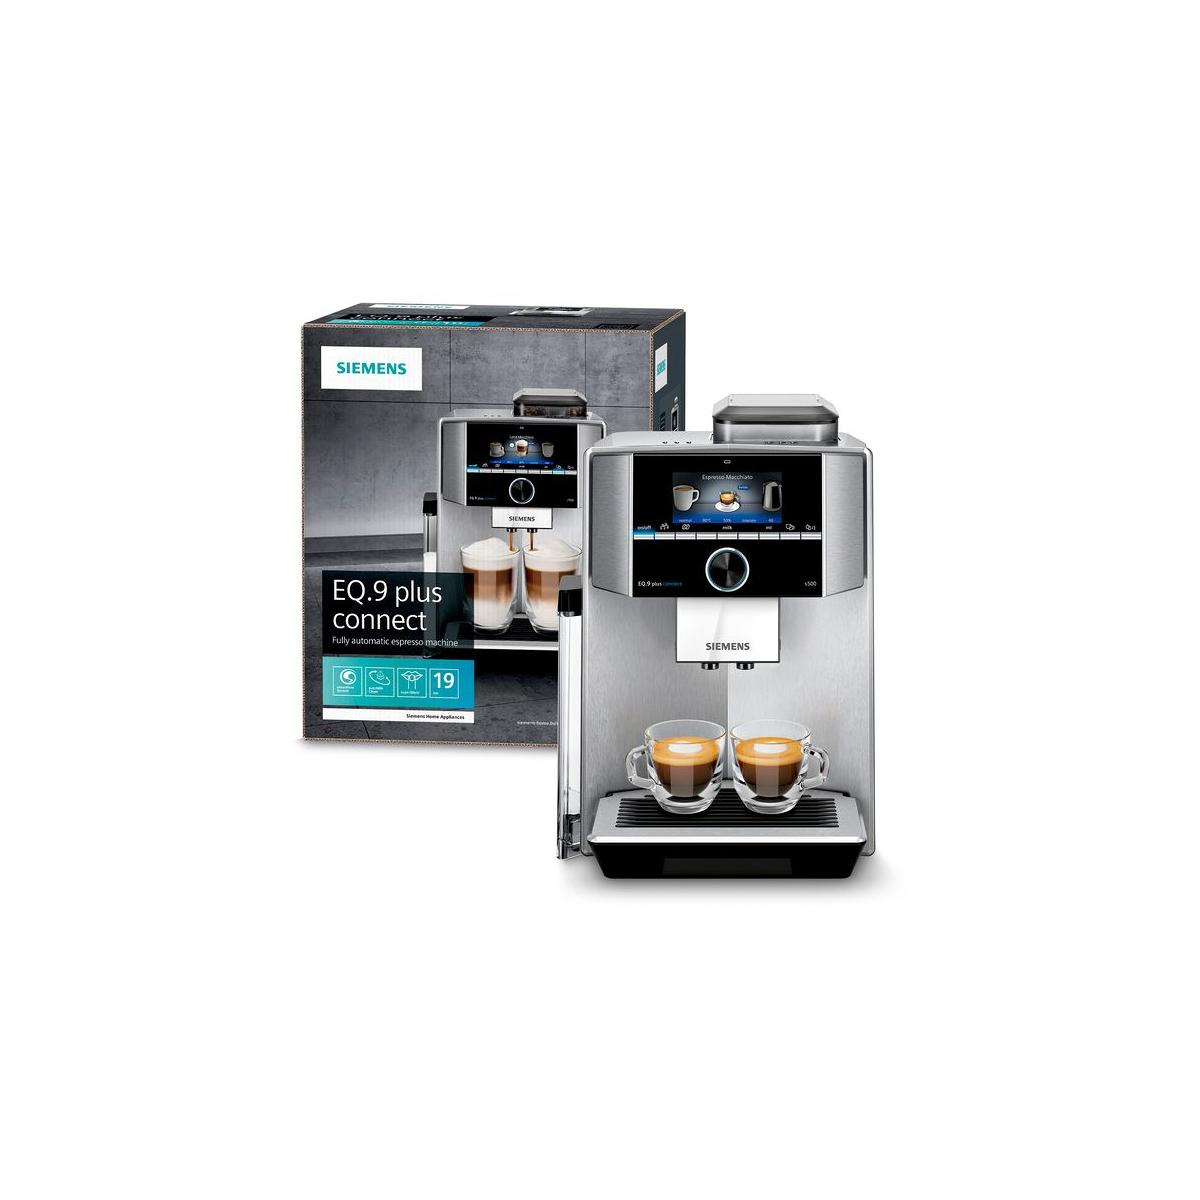 Siemens TI9558X1DE EQ.9 1500W, s500 Edelstahl Wagner Kaffeevollautomat, connect Elektroshop Displaysprache auswählbar, plus